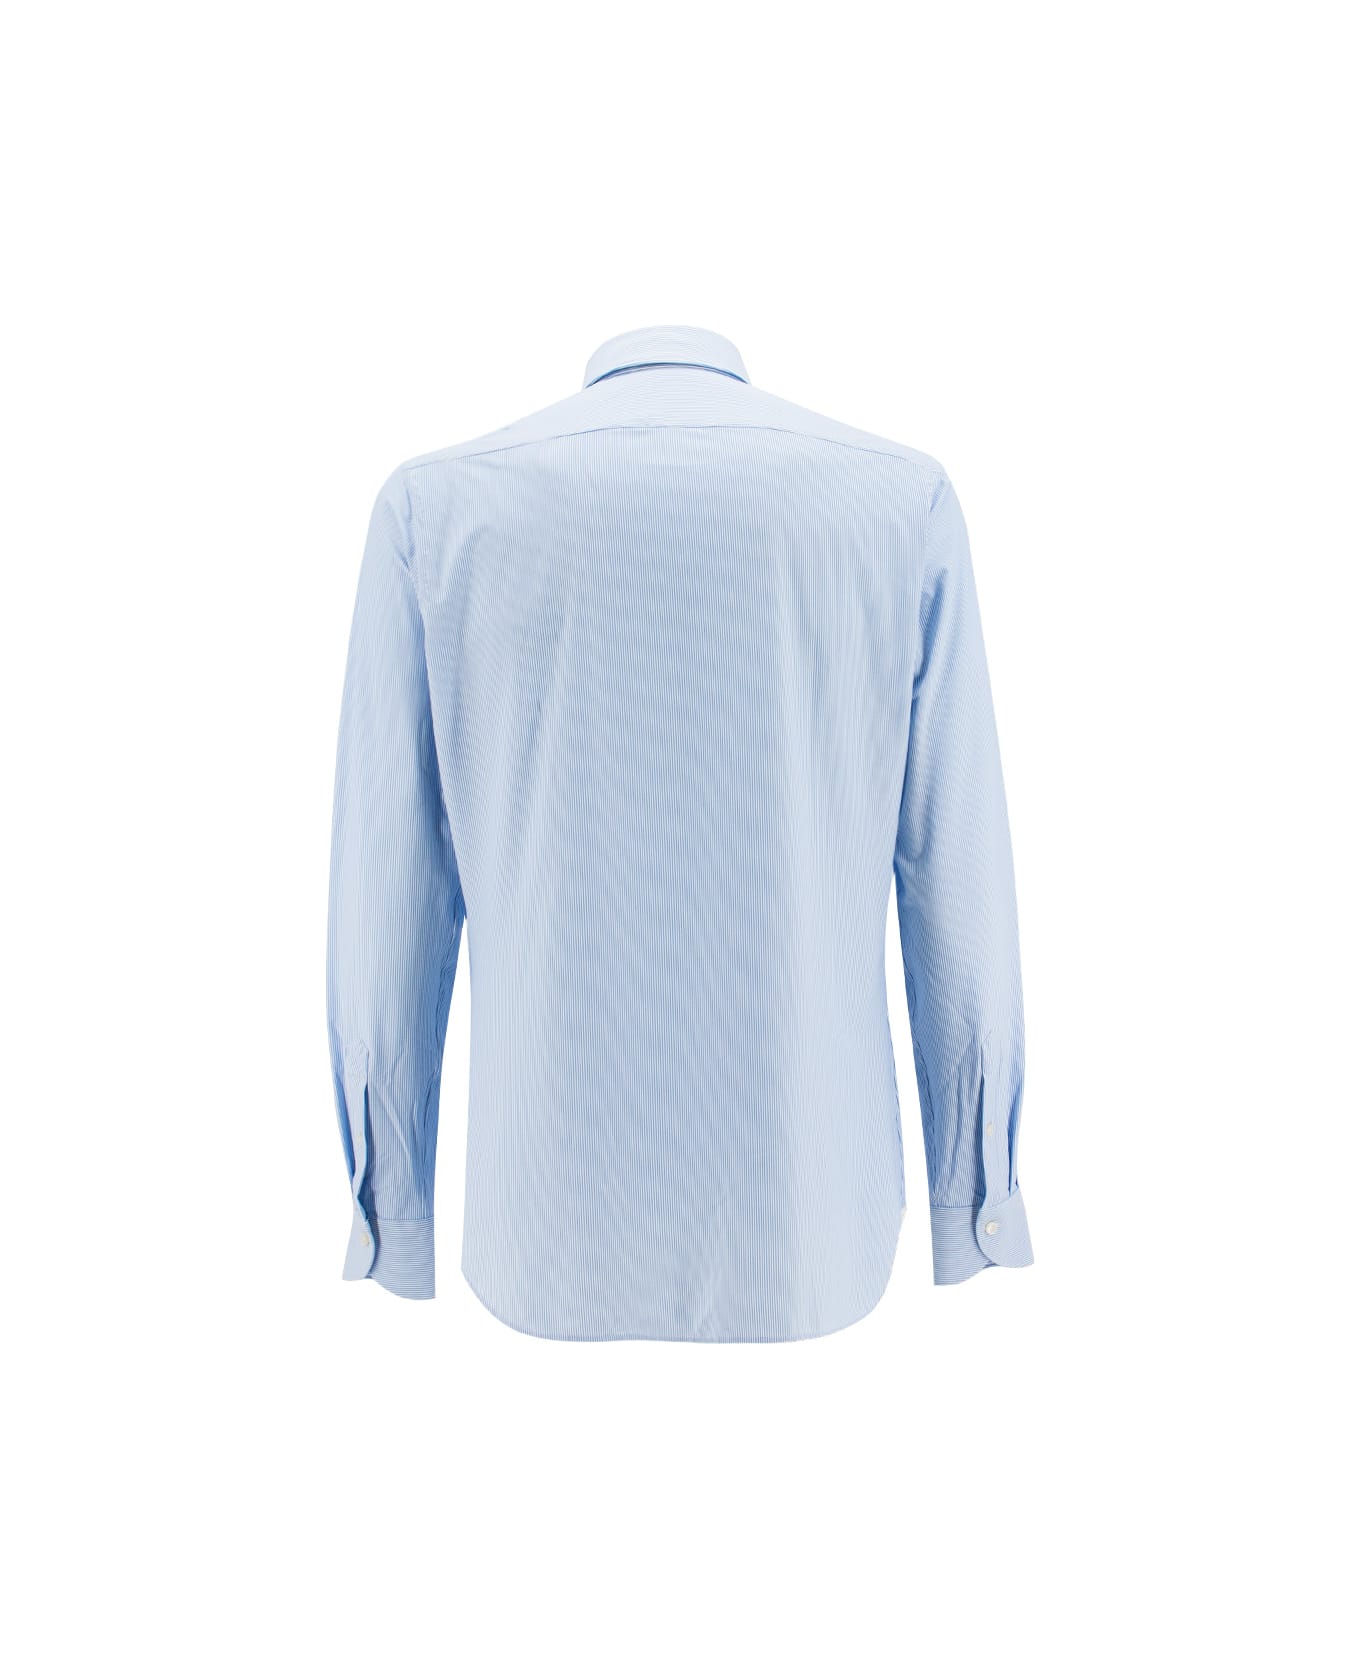 Xacus Shirt - STRIPE BLUE  WHITE シャツ